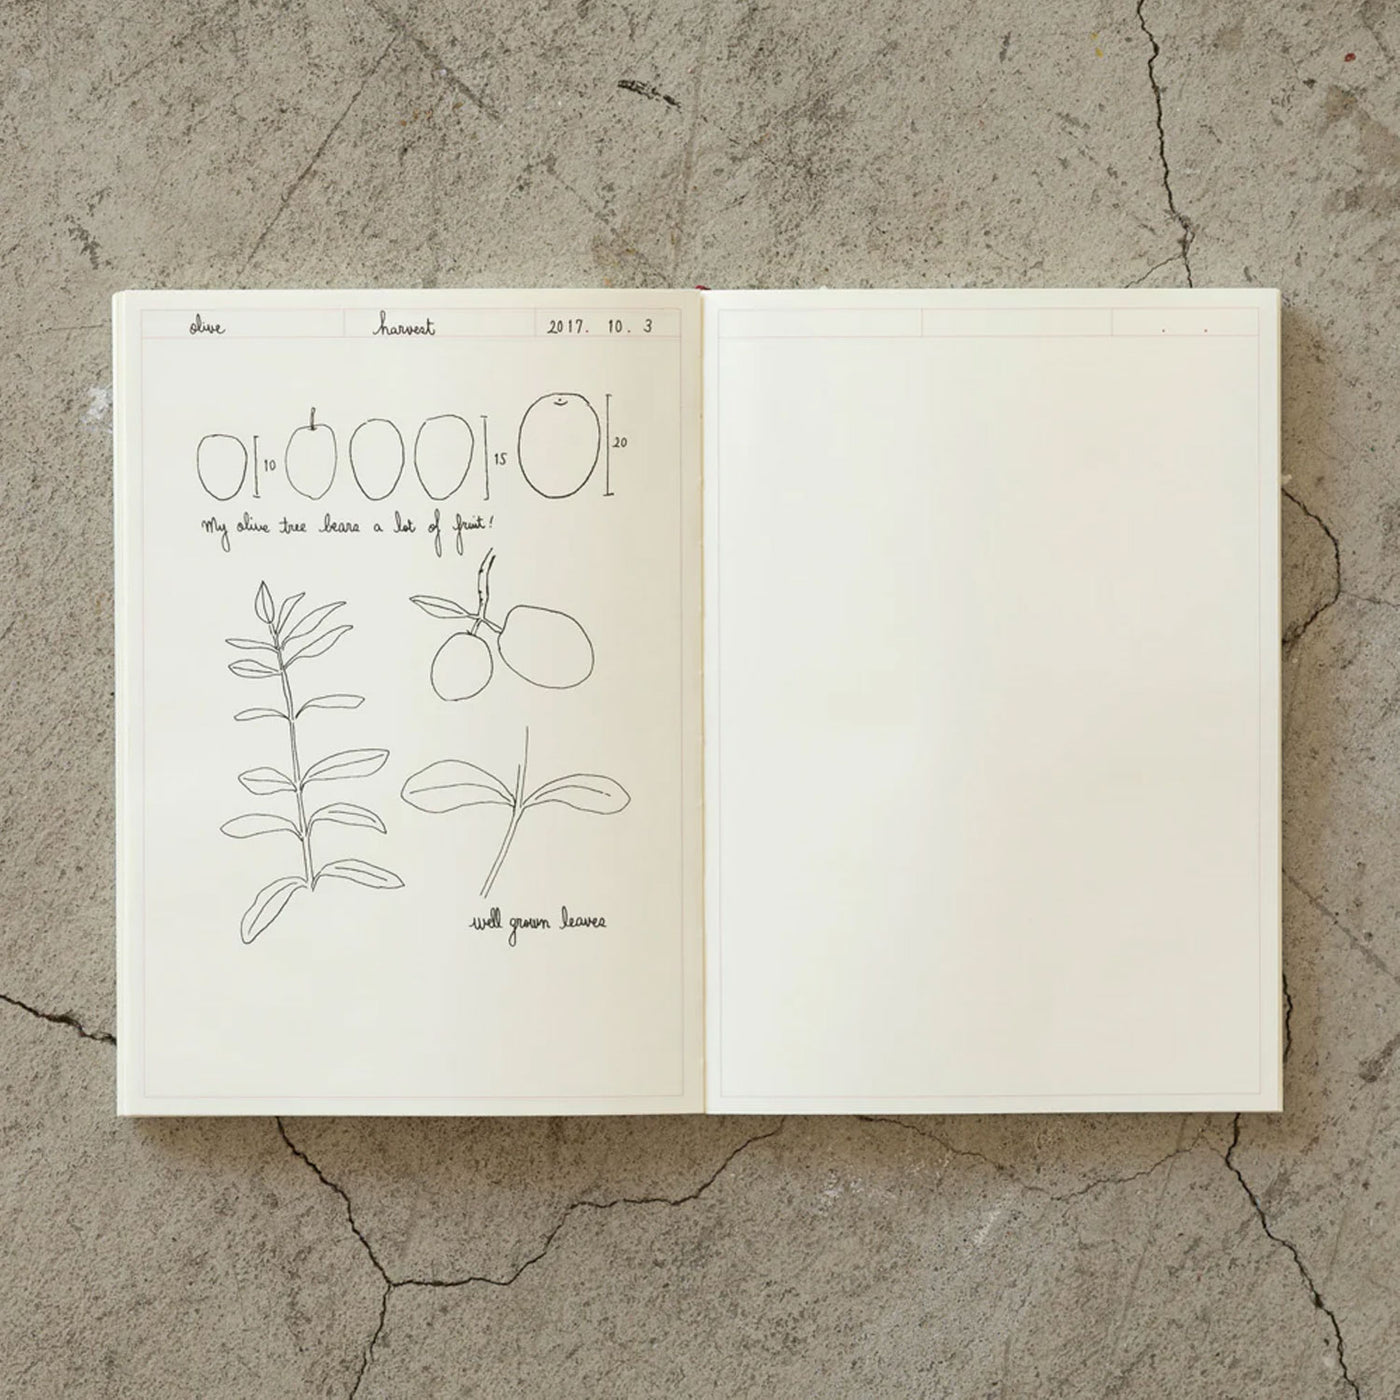 MD Paper Ivory Frame Notebook Journal - A5, Plain